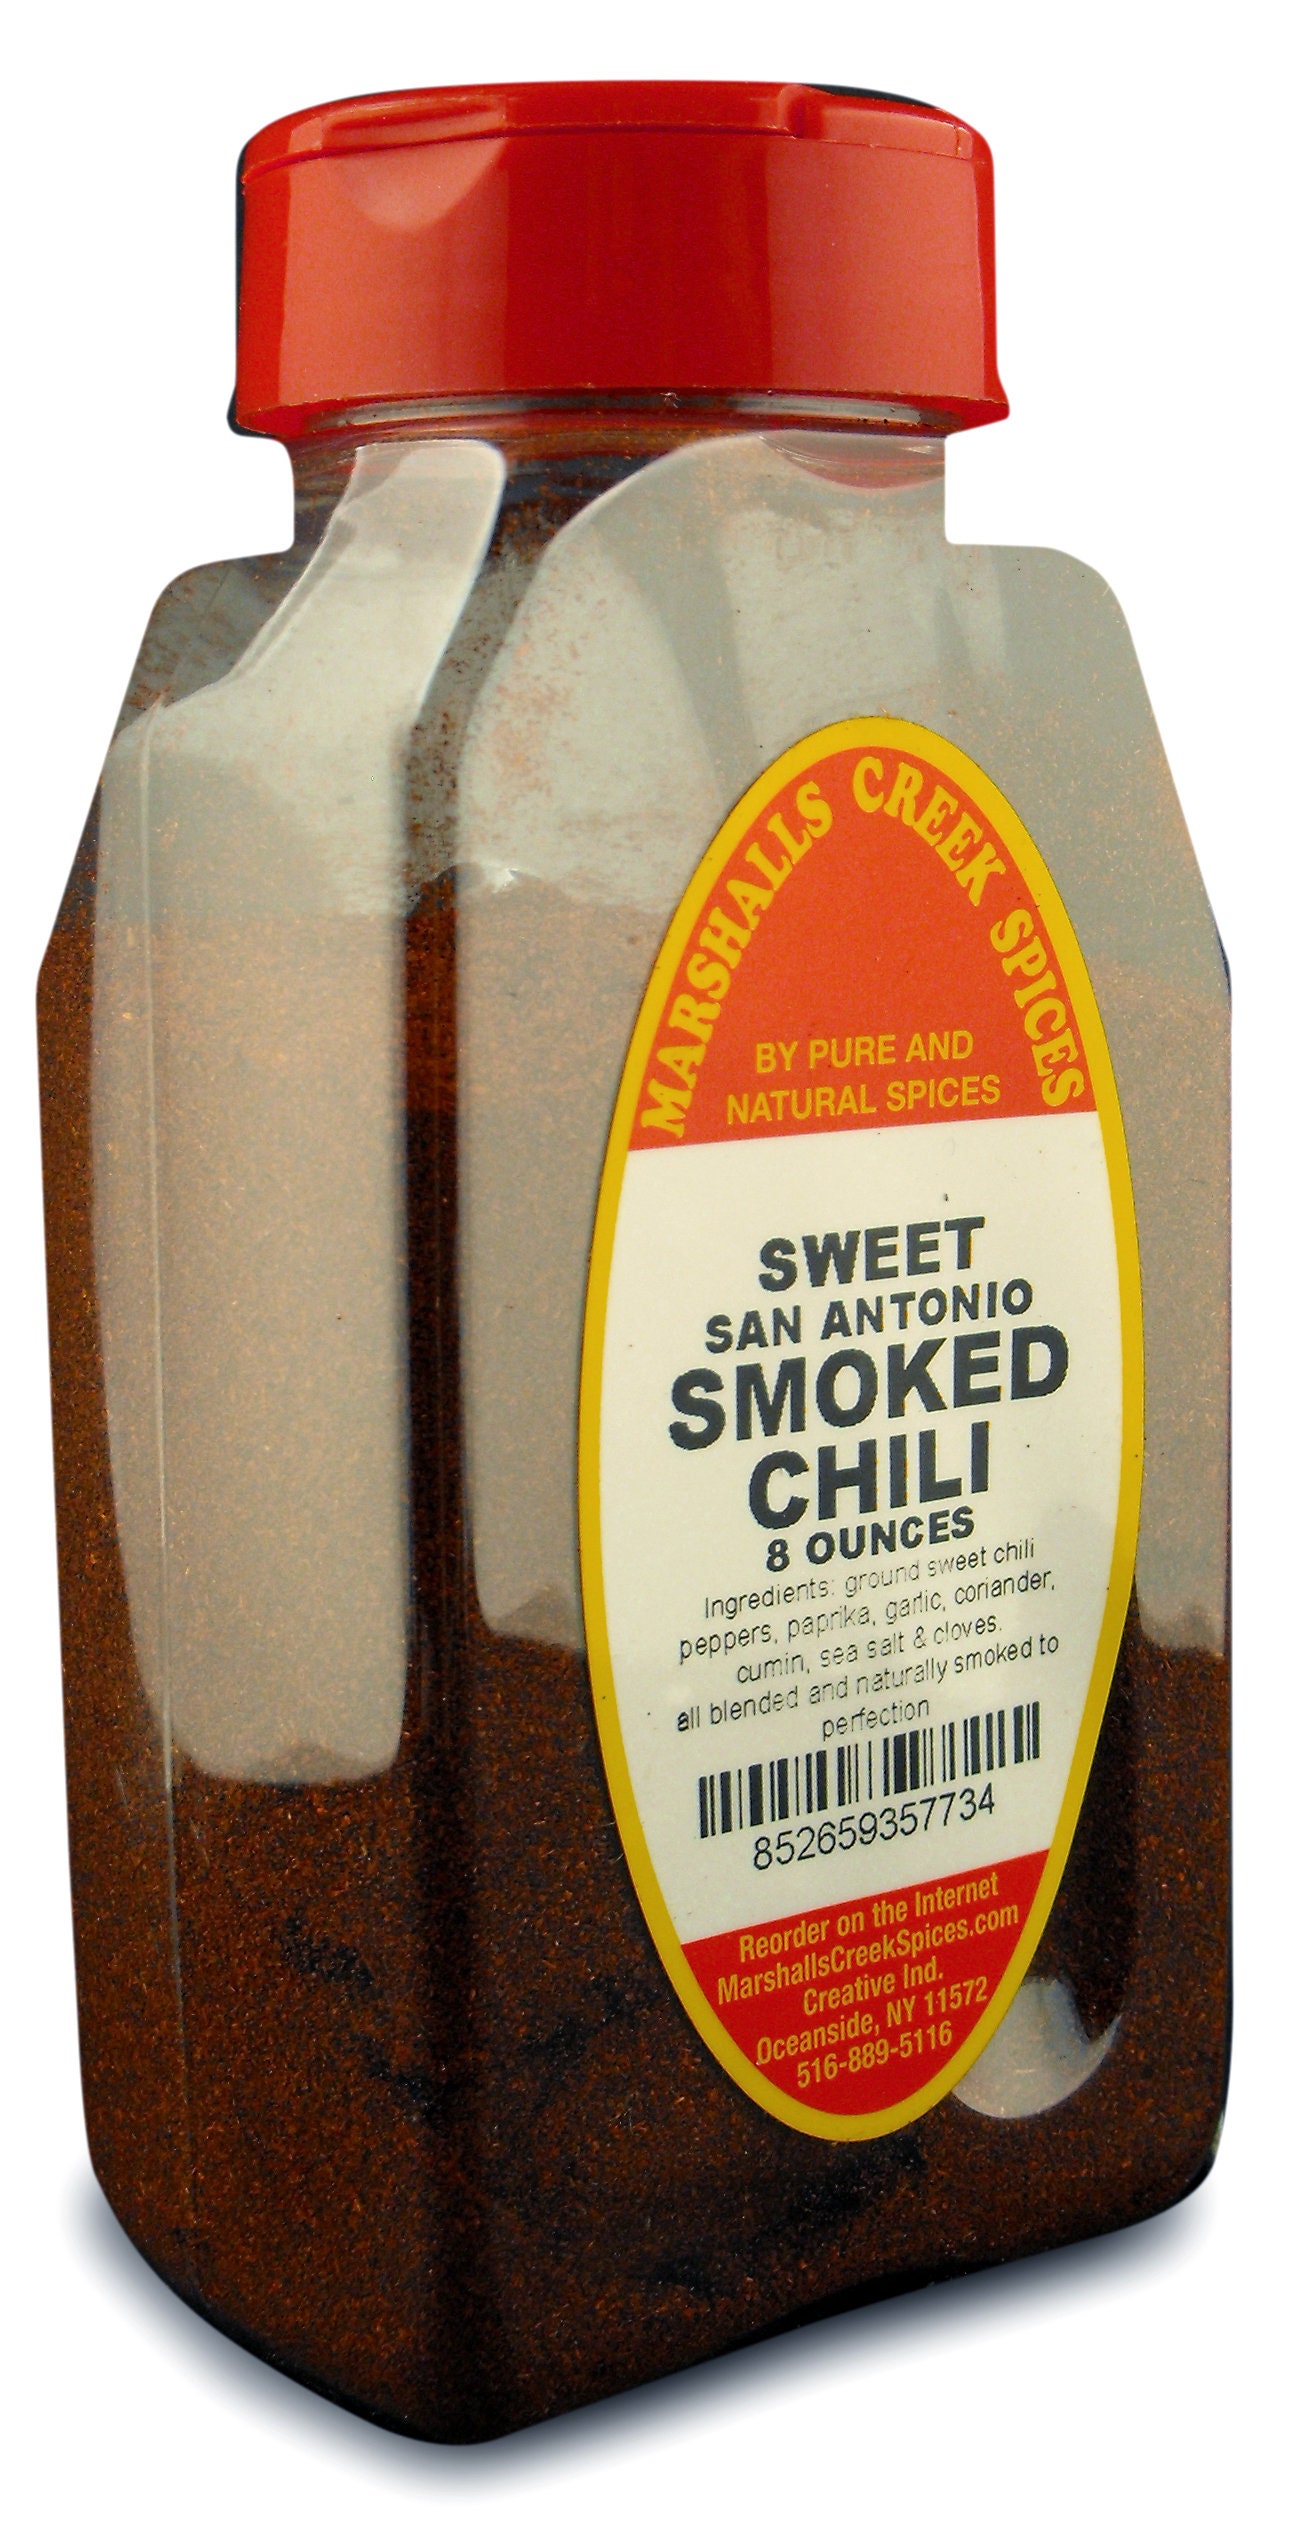 Smoked Sweet San Antonio Chili Blend 8 Oz., One Price Shipping, Any Quantity, Assortment Marshalls Creek Spices